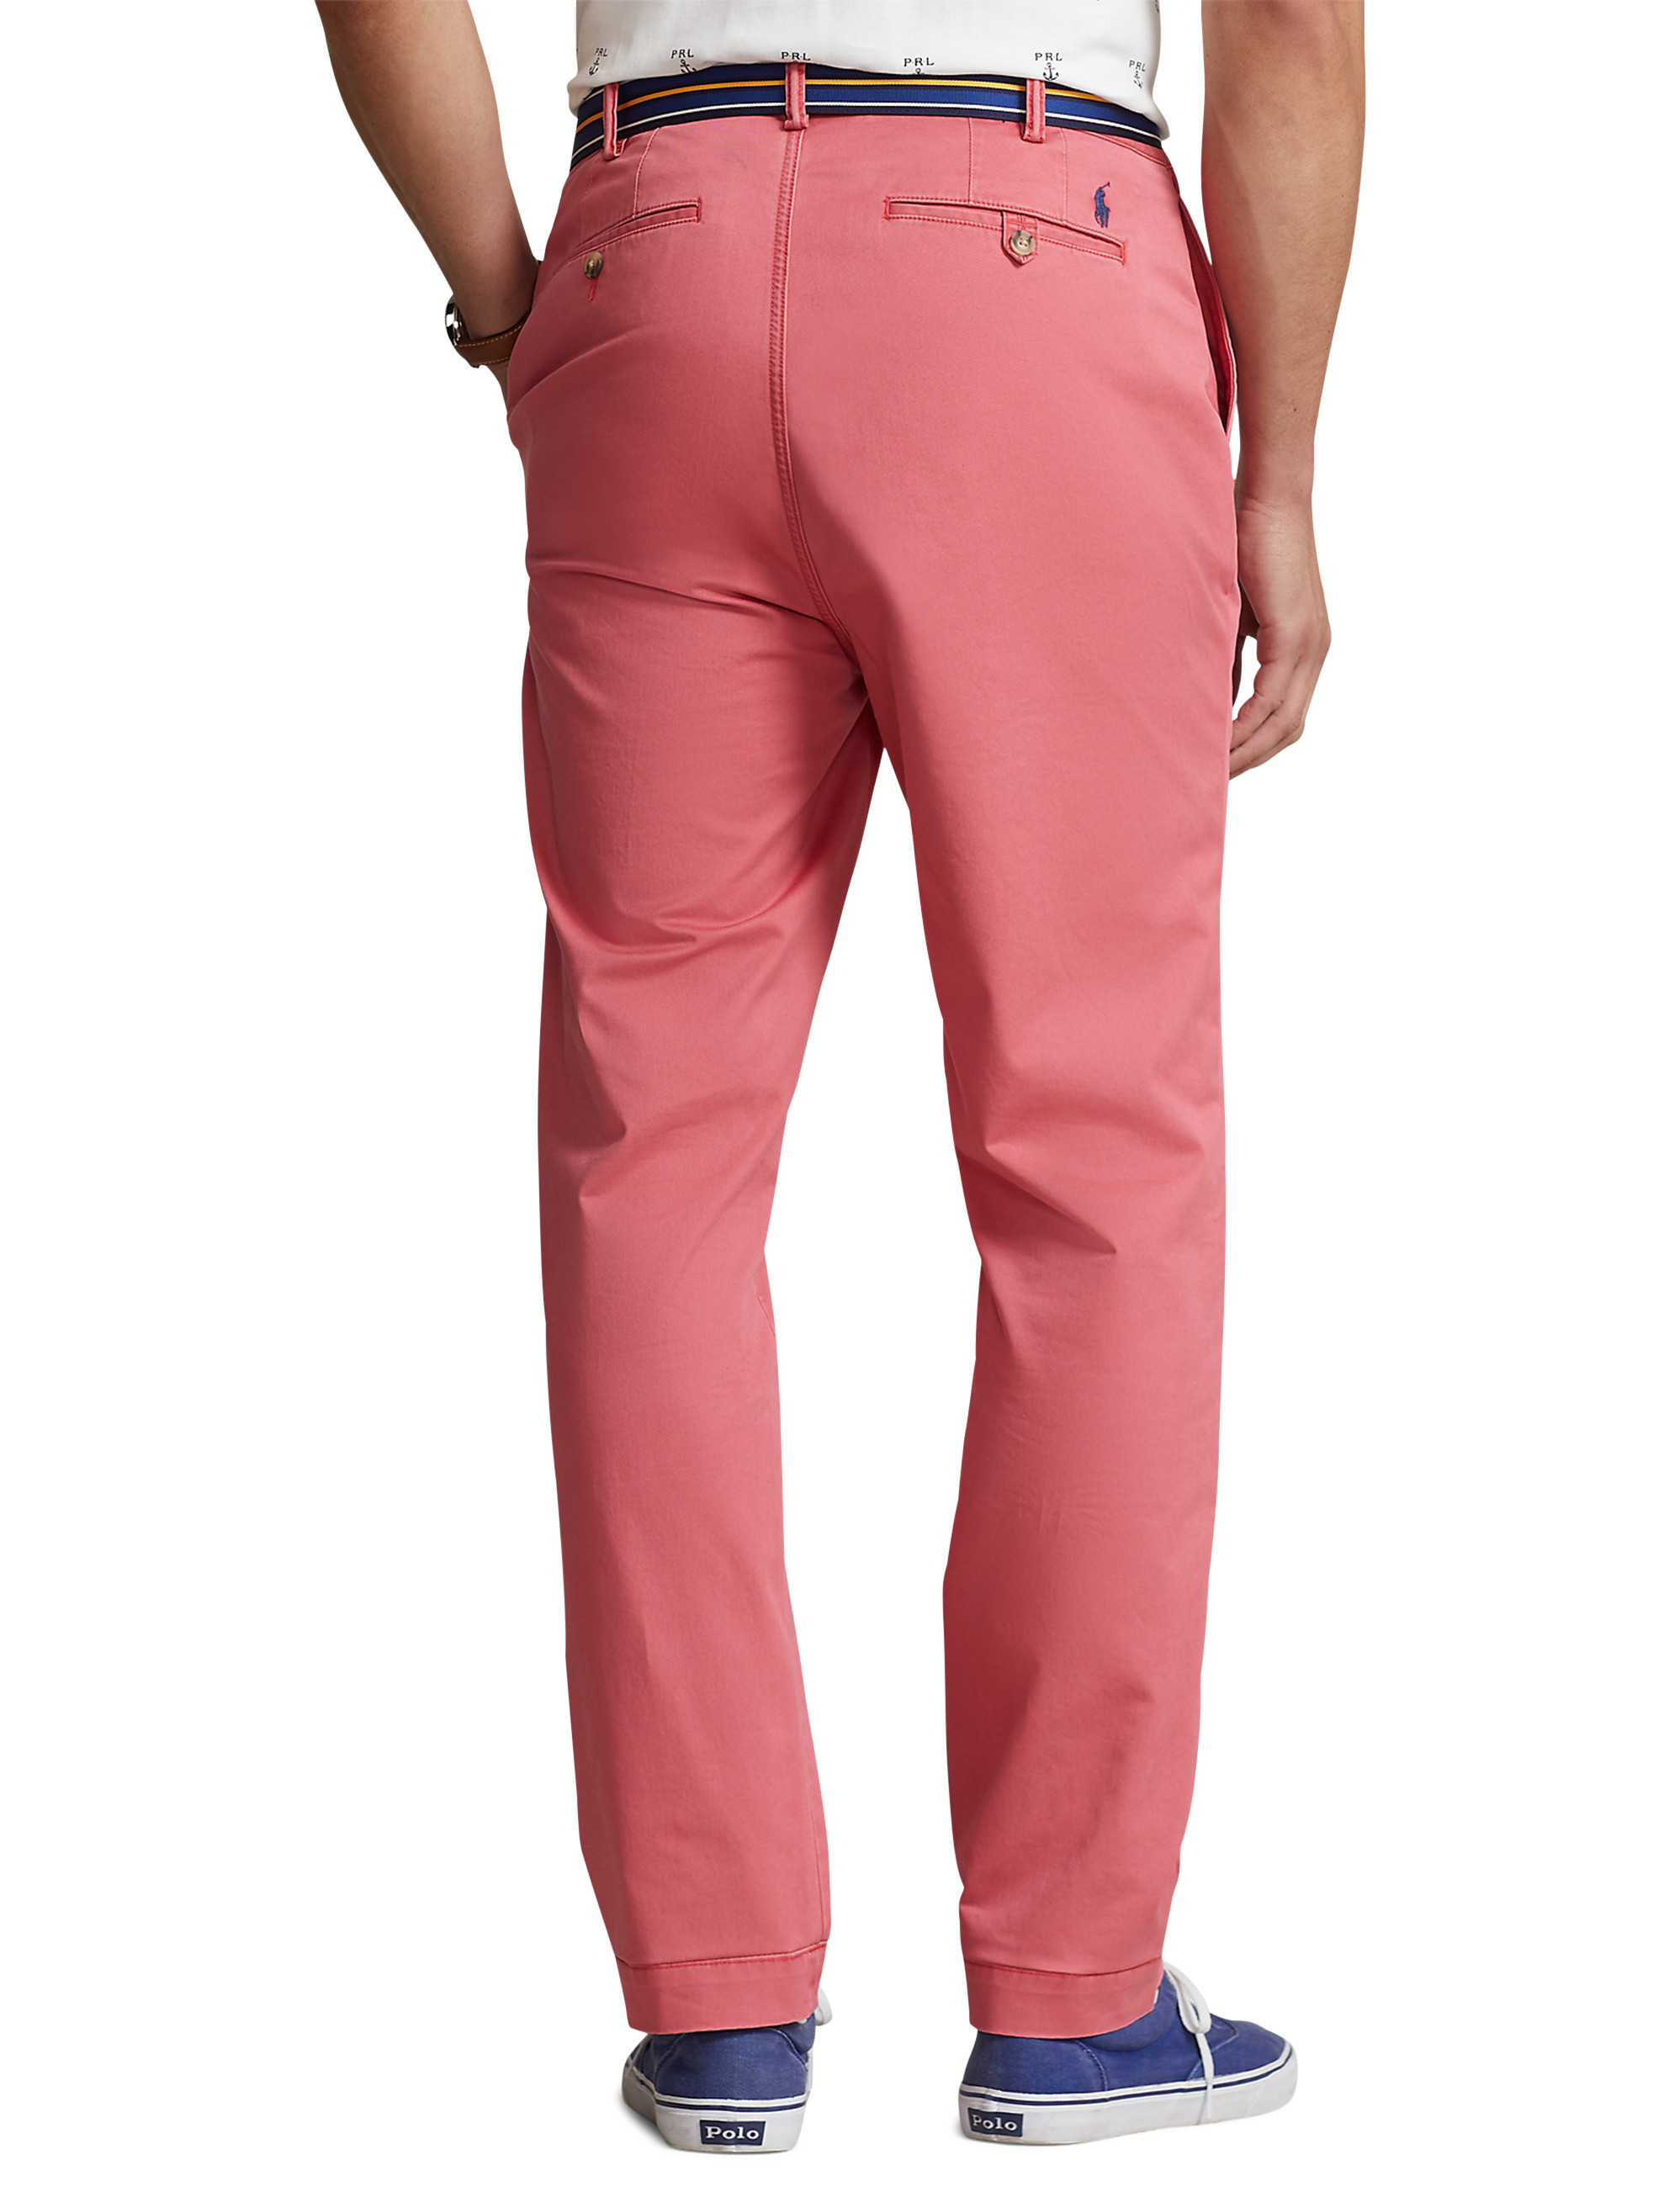 Hot Pink Microfiber Pants